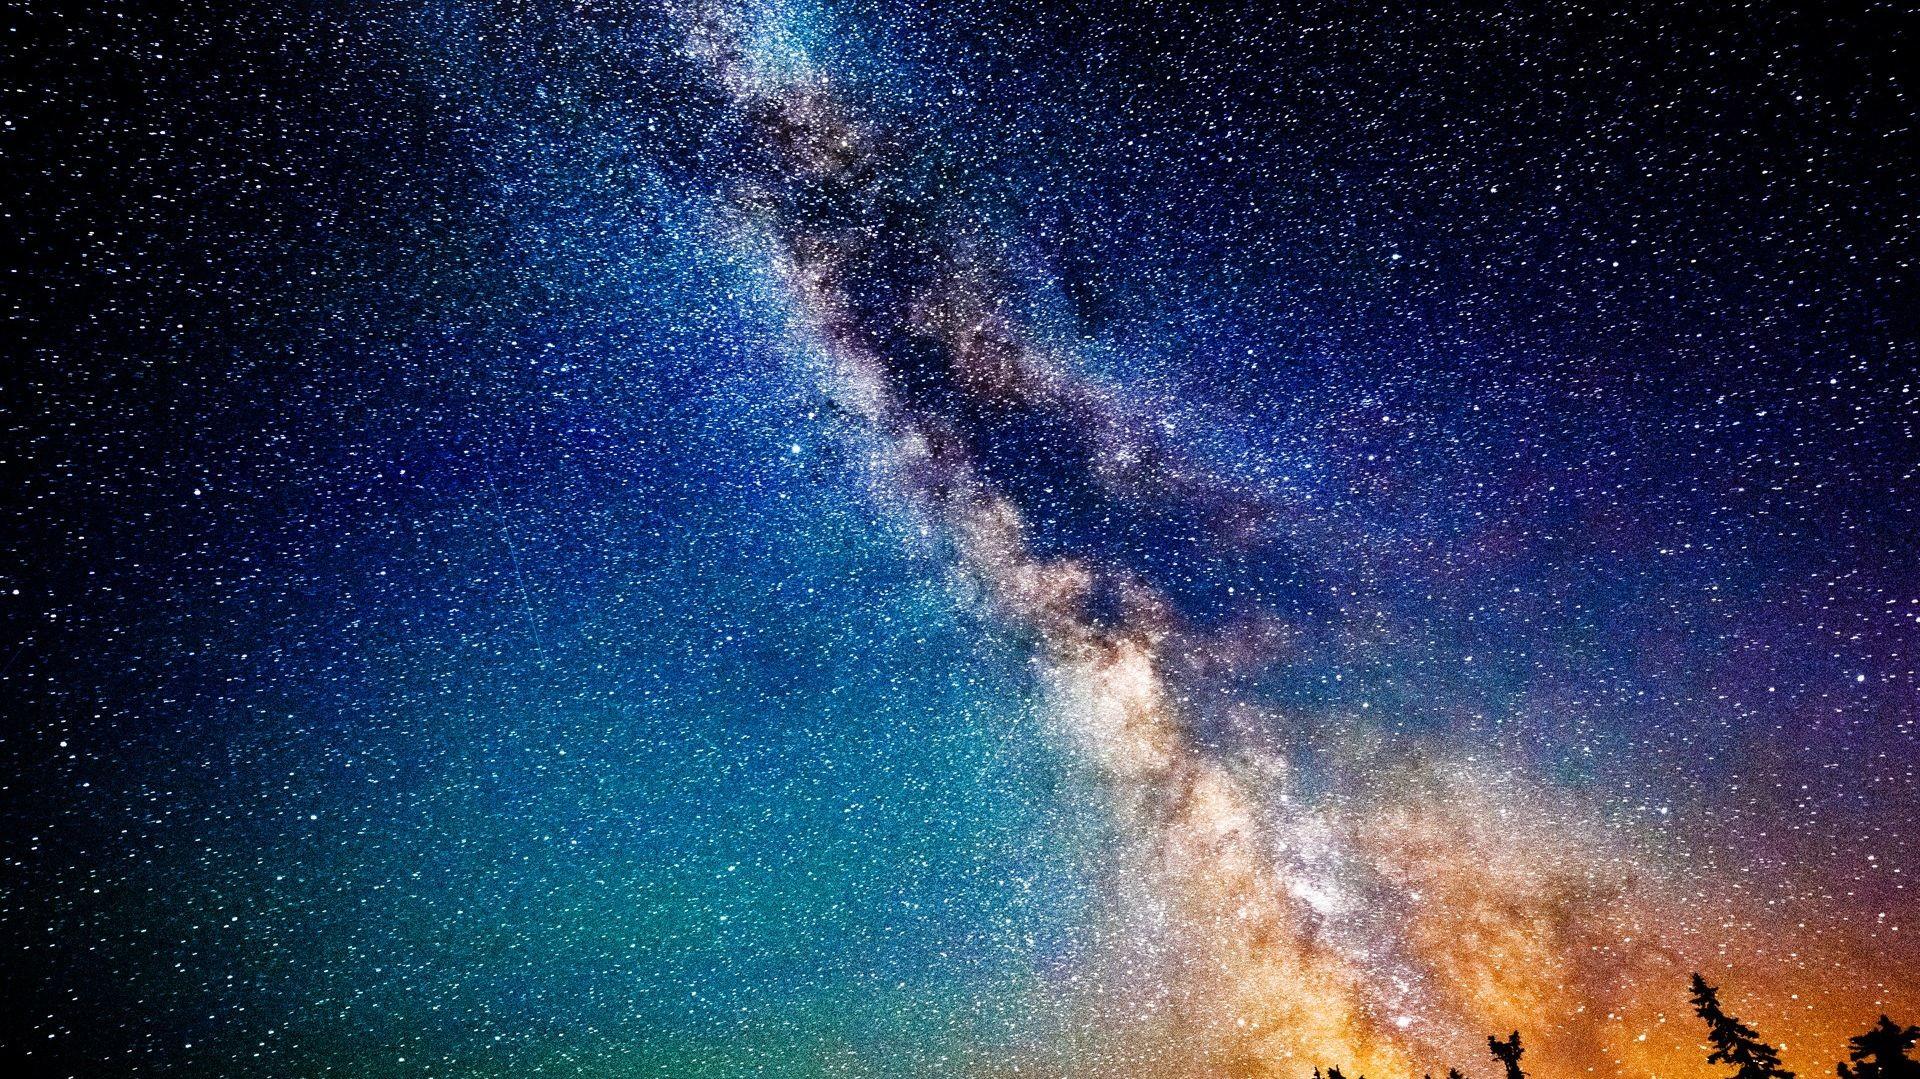 Ultra HD Space Wallpaper Image